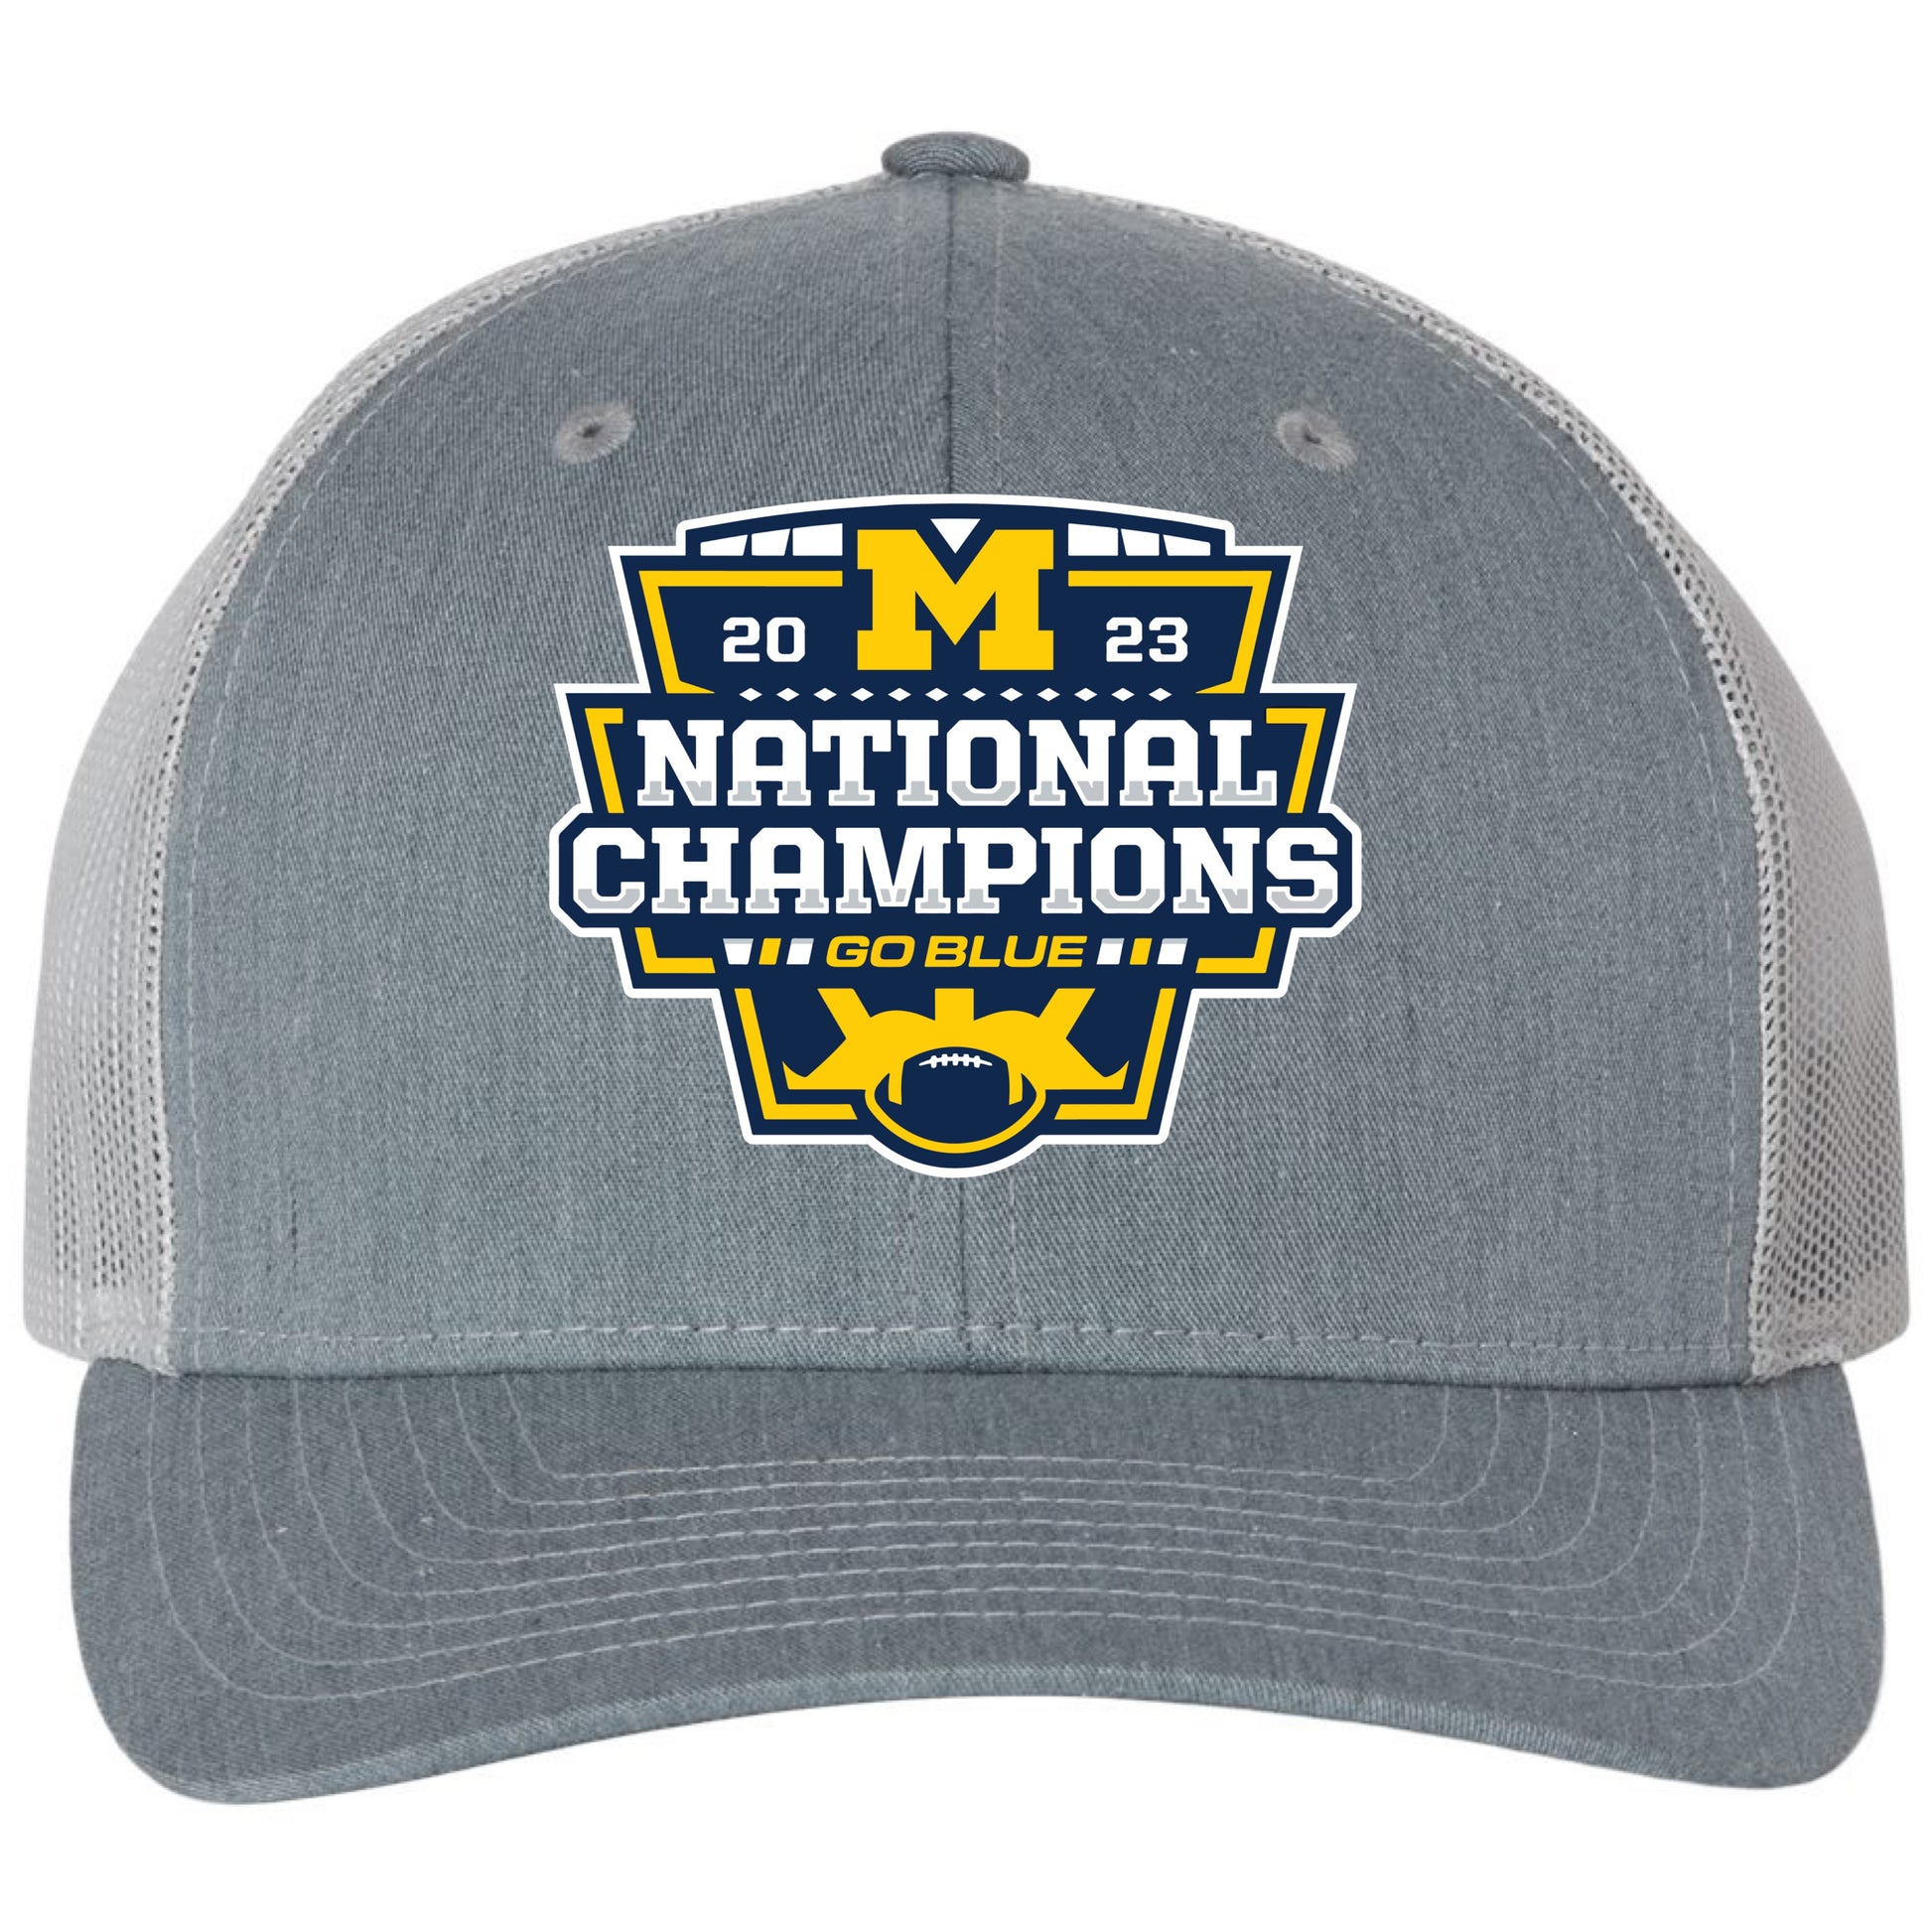 Michigan College Football Playoff 2023 National Champions 3D Snapback Trucker Hat- Grey/ Light Grey - Ten Gallon Hat Co.